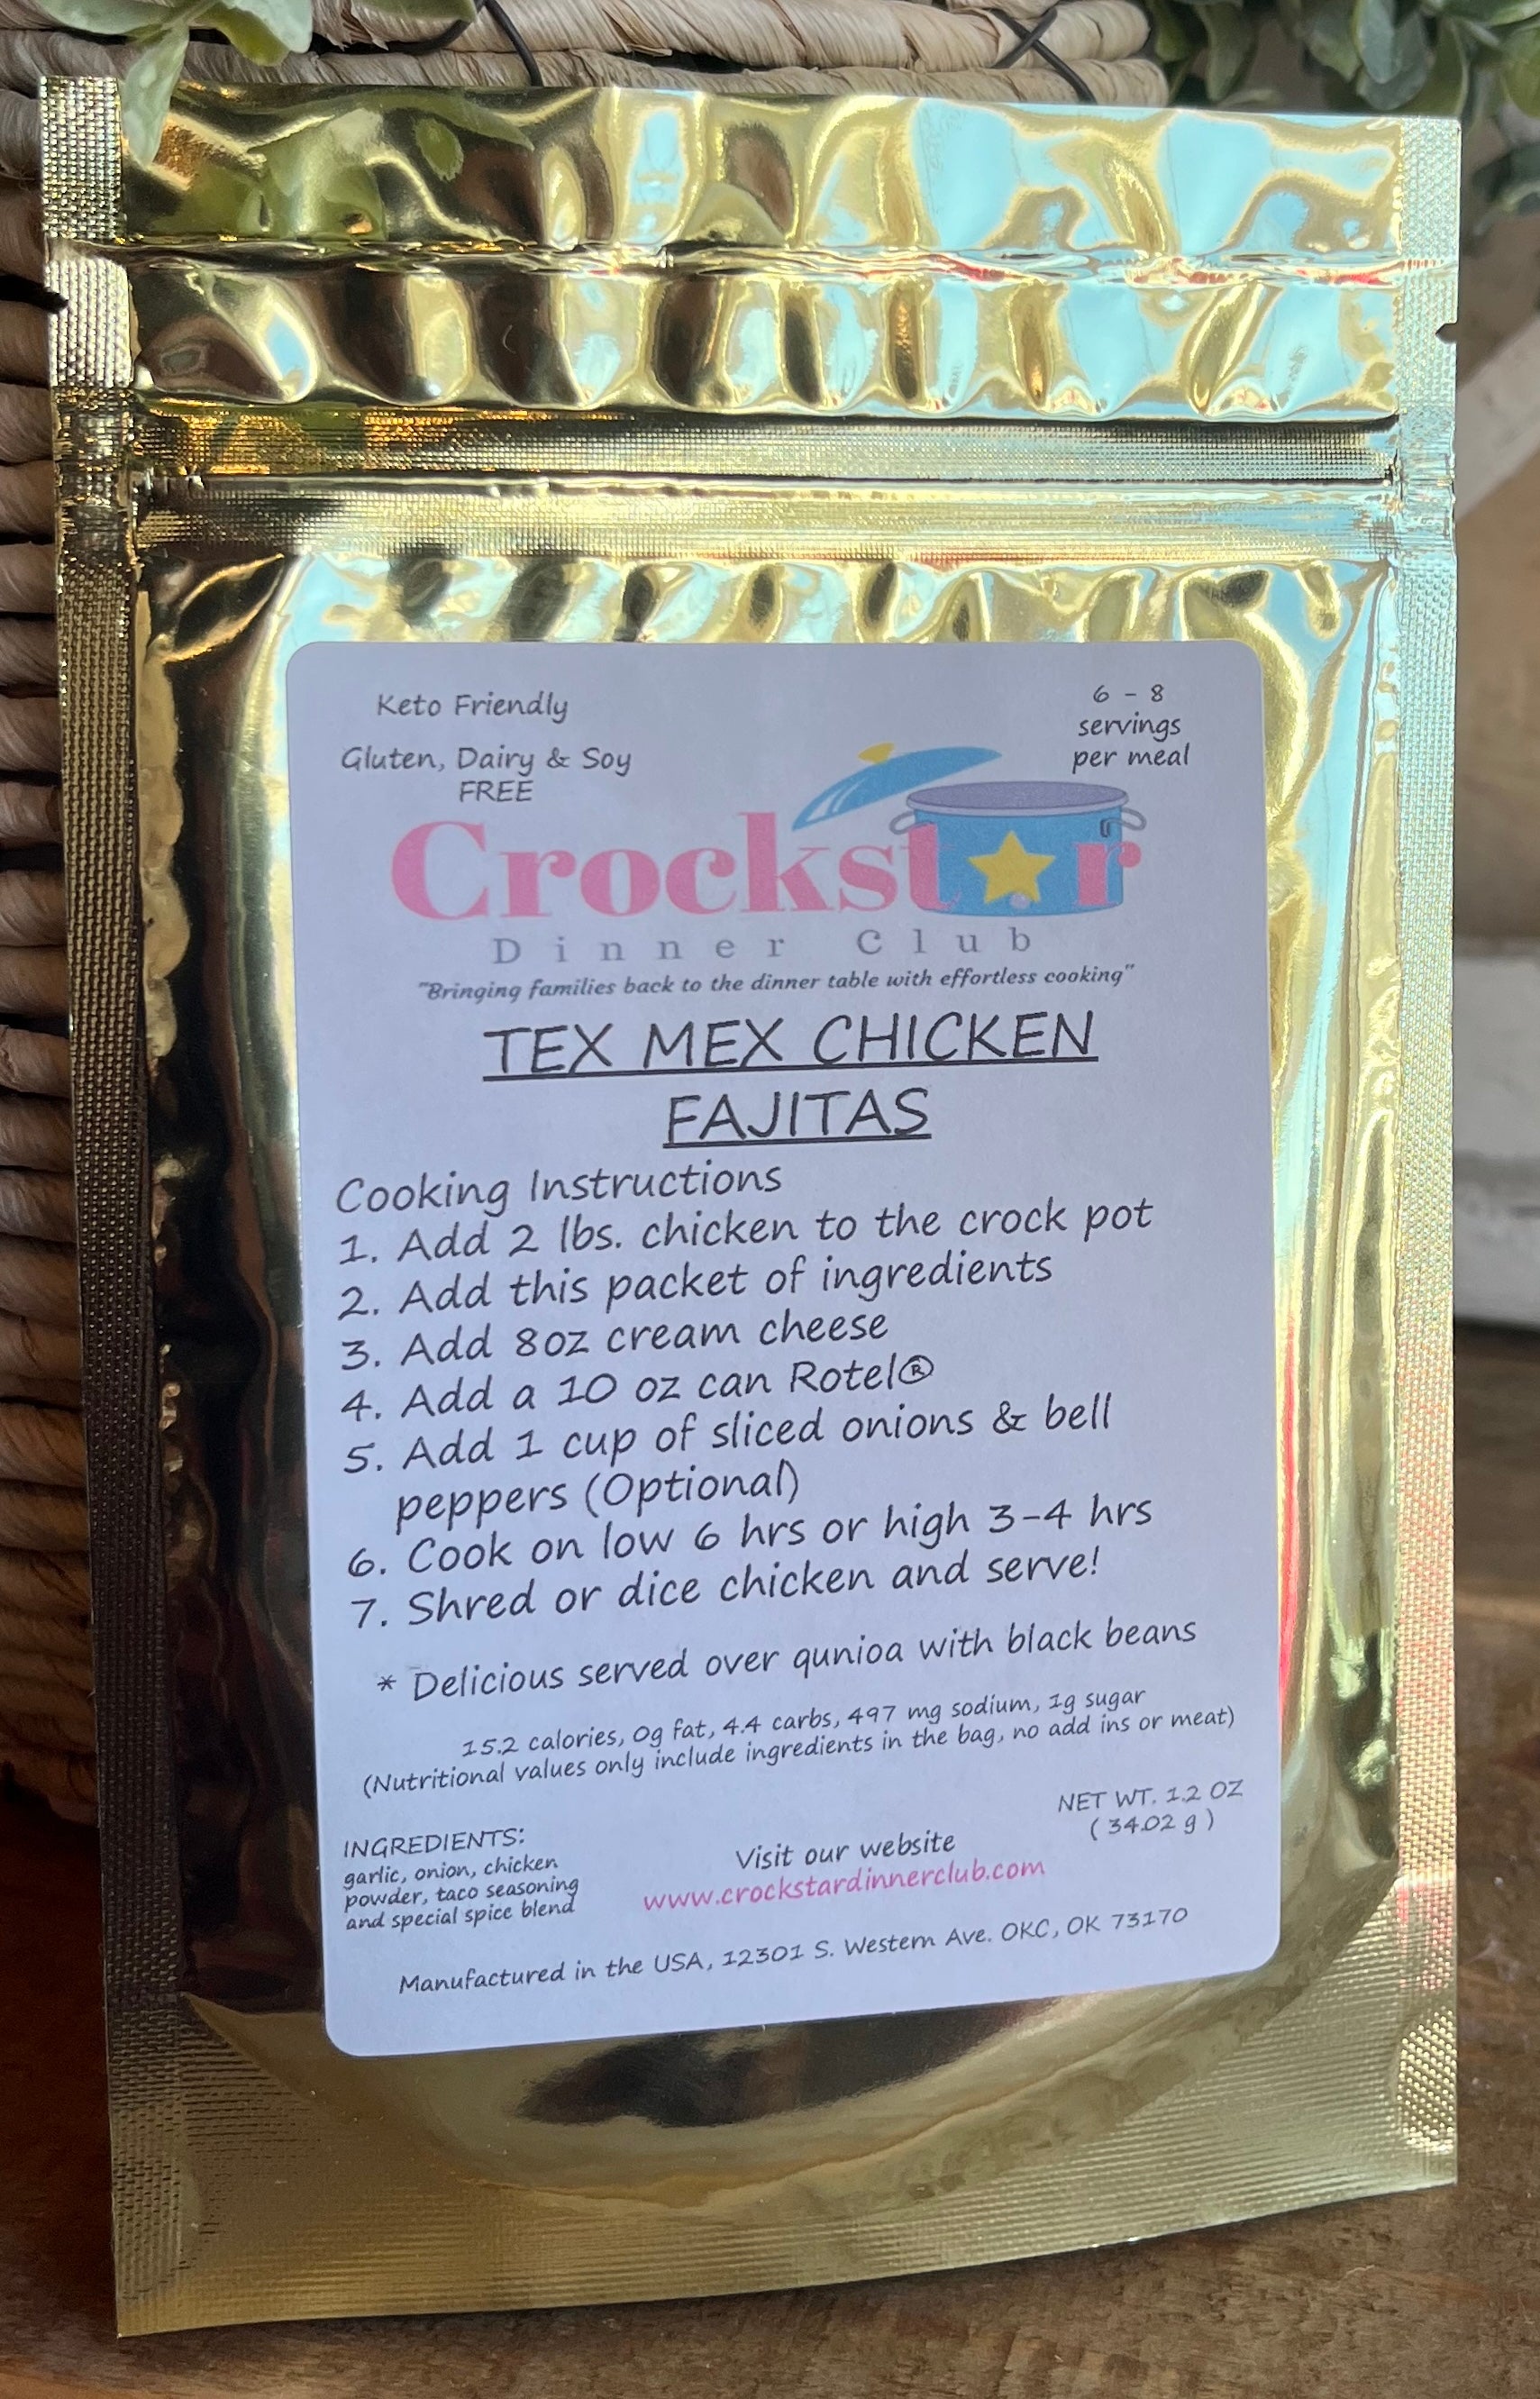 TexMex Chicken Fajitas - Crockstar Dinner Club